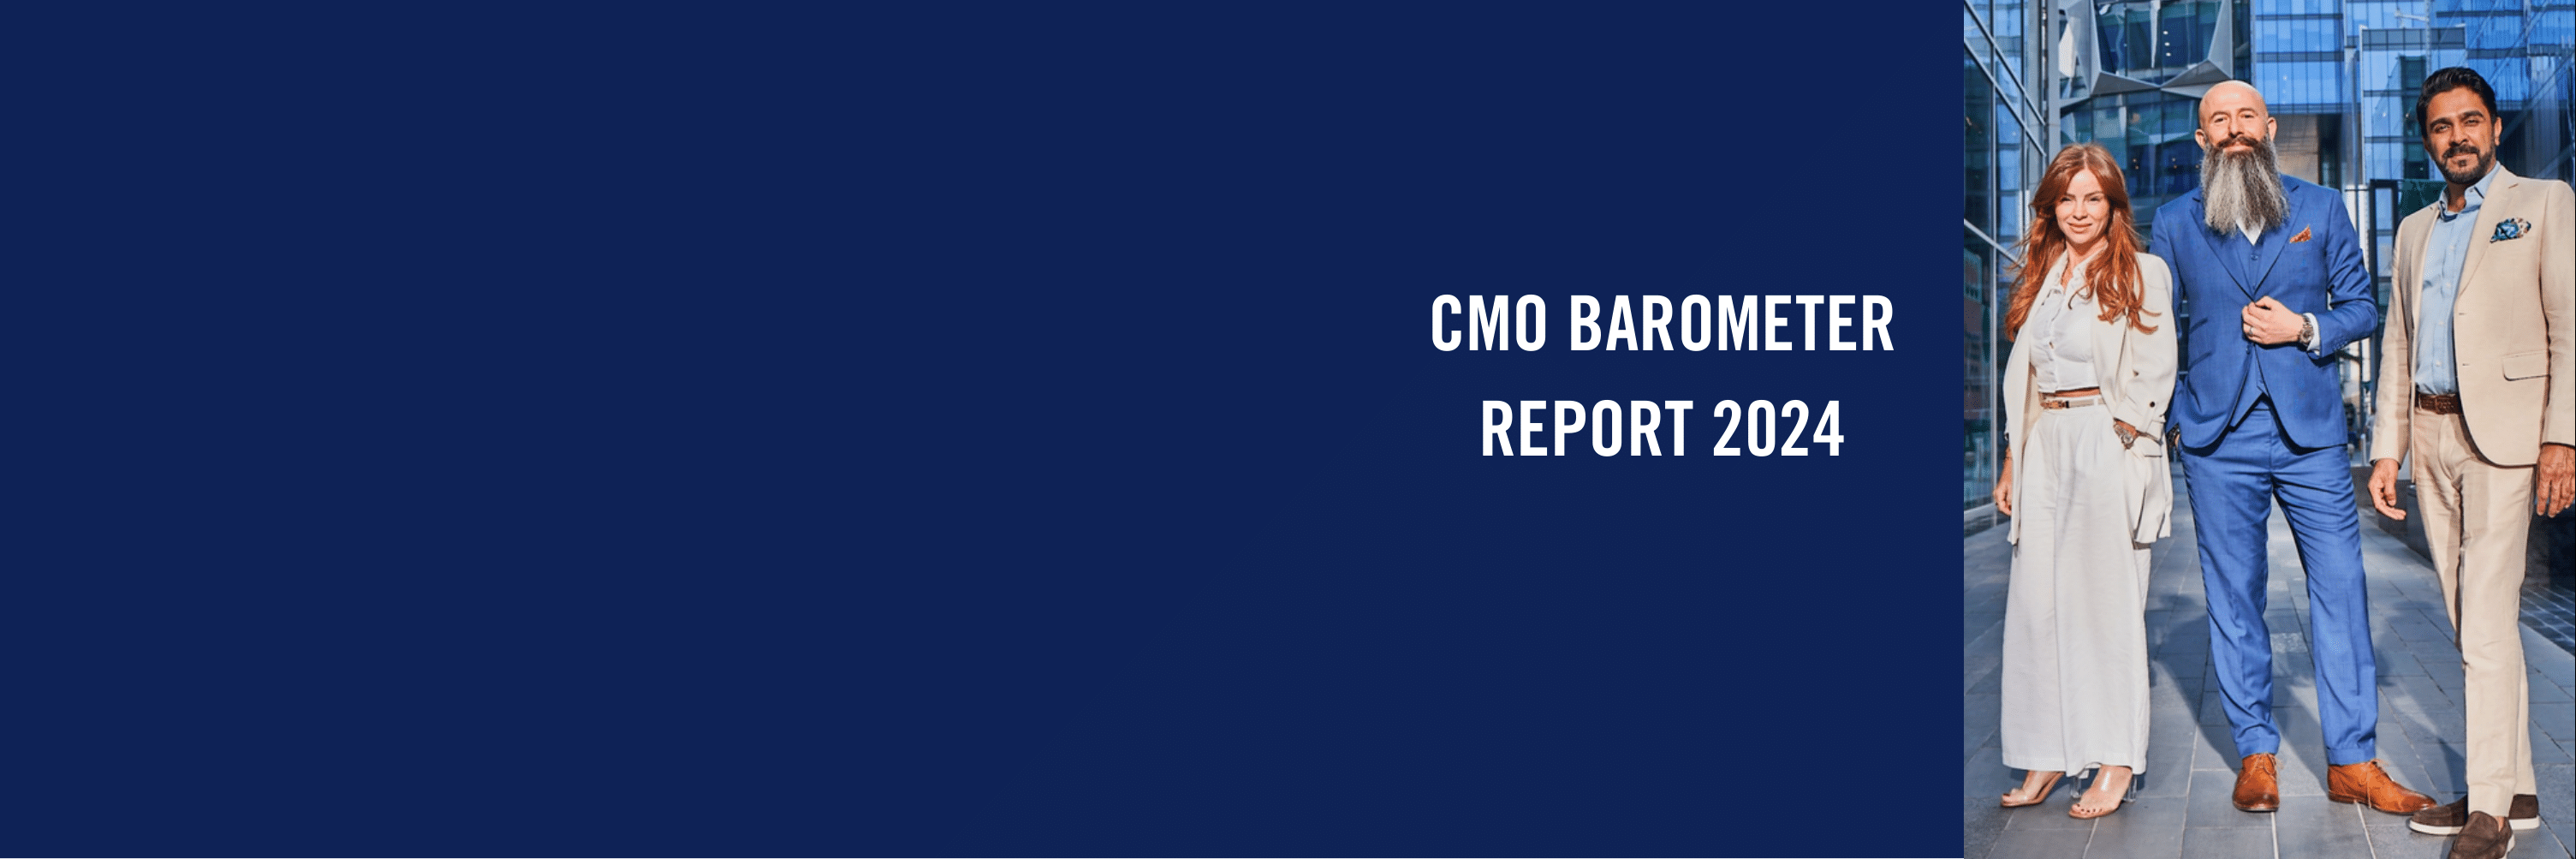 The CMO Barometer 2024